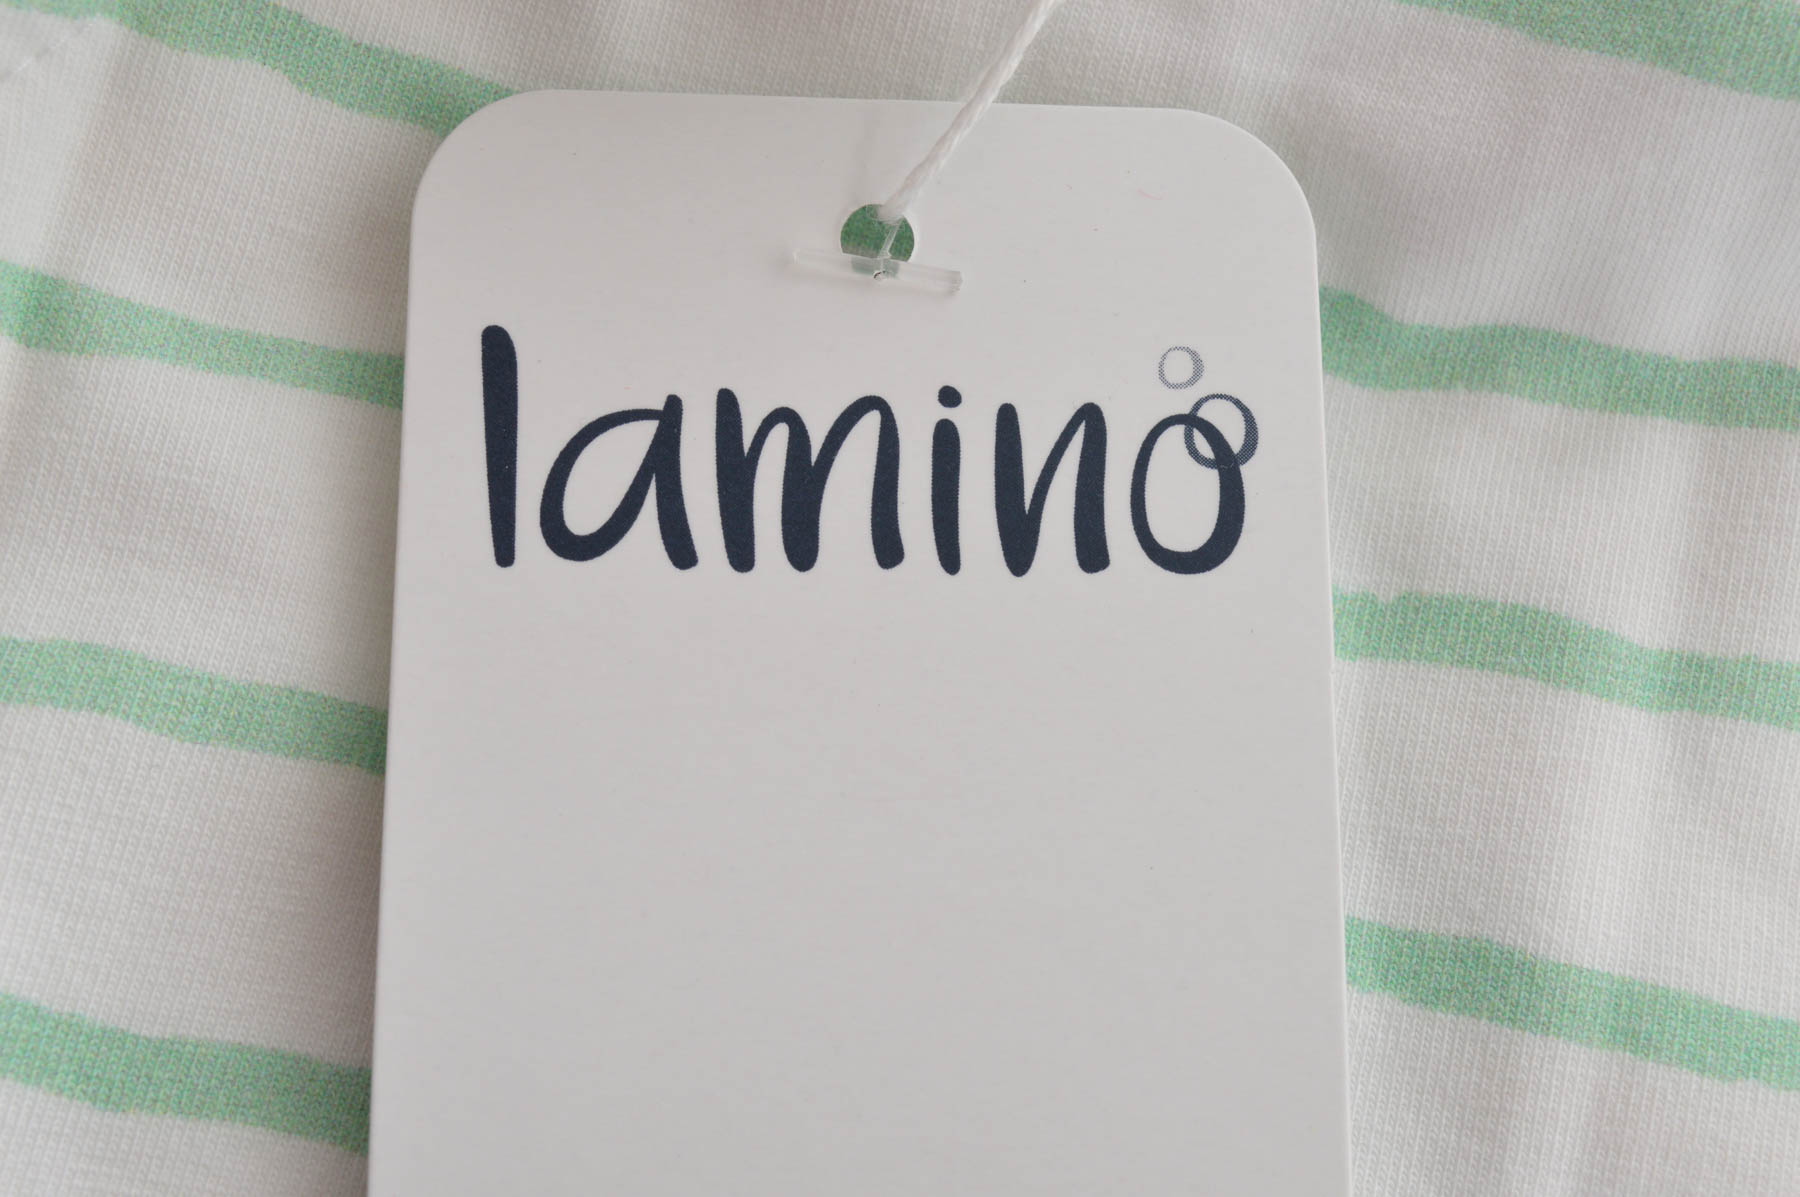 Rochia pentru copil - Lamino - 2